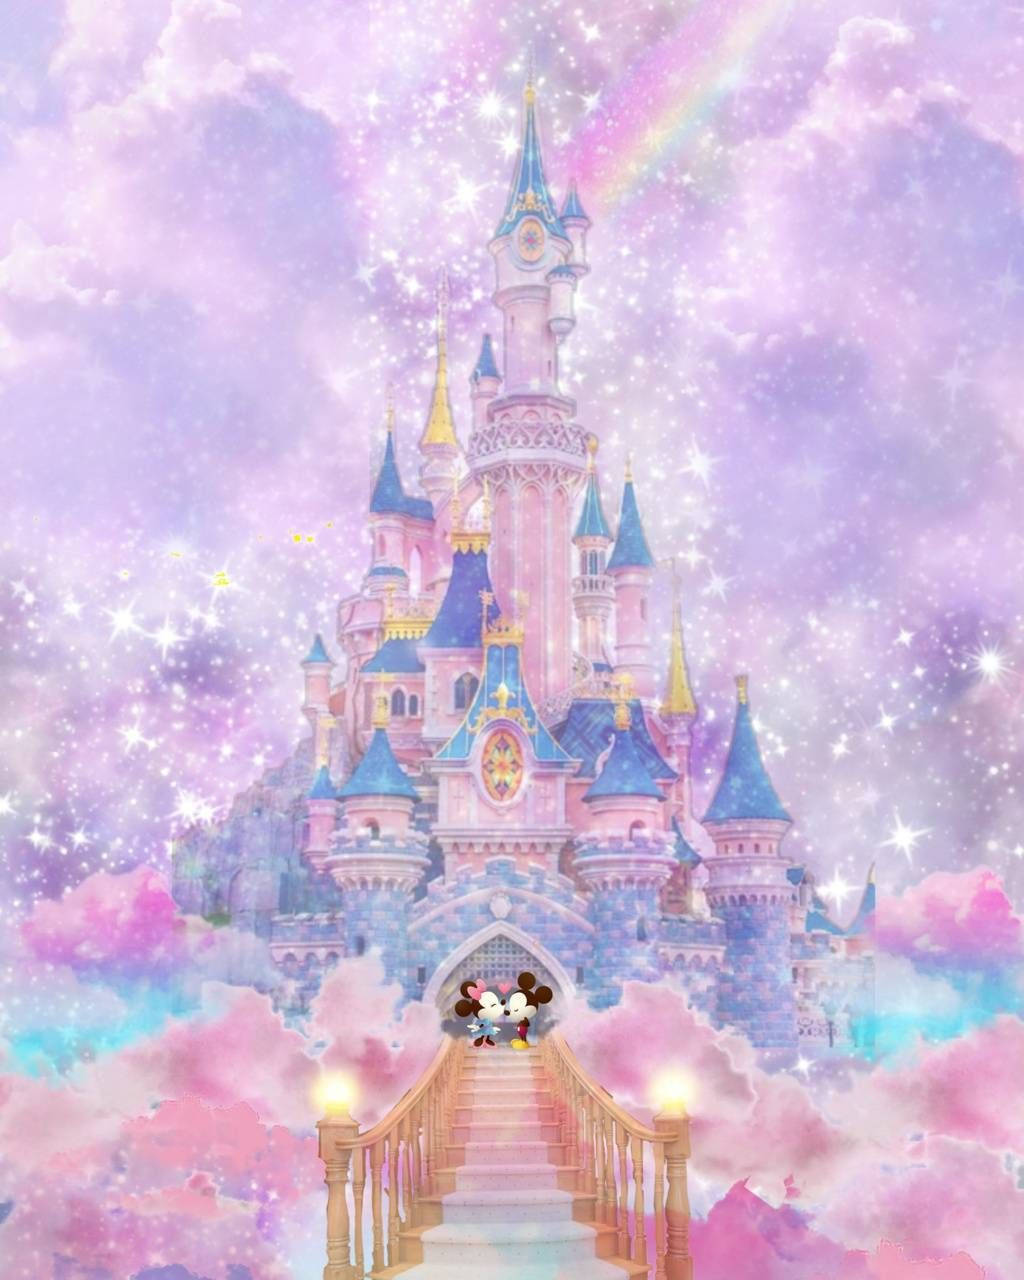 Galaxy-themed Disneyland Castle Wallpaper